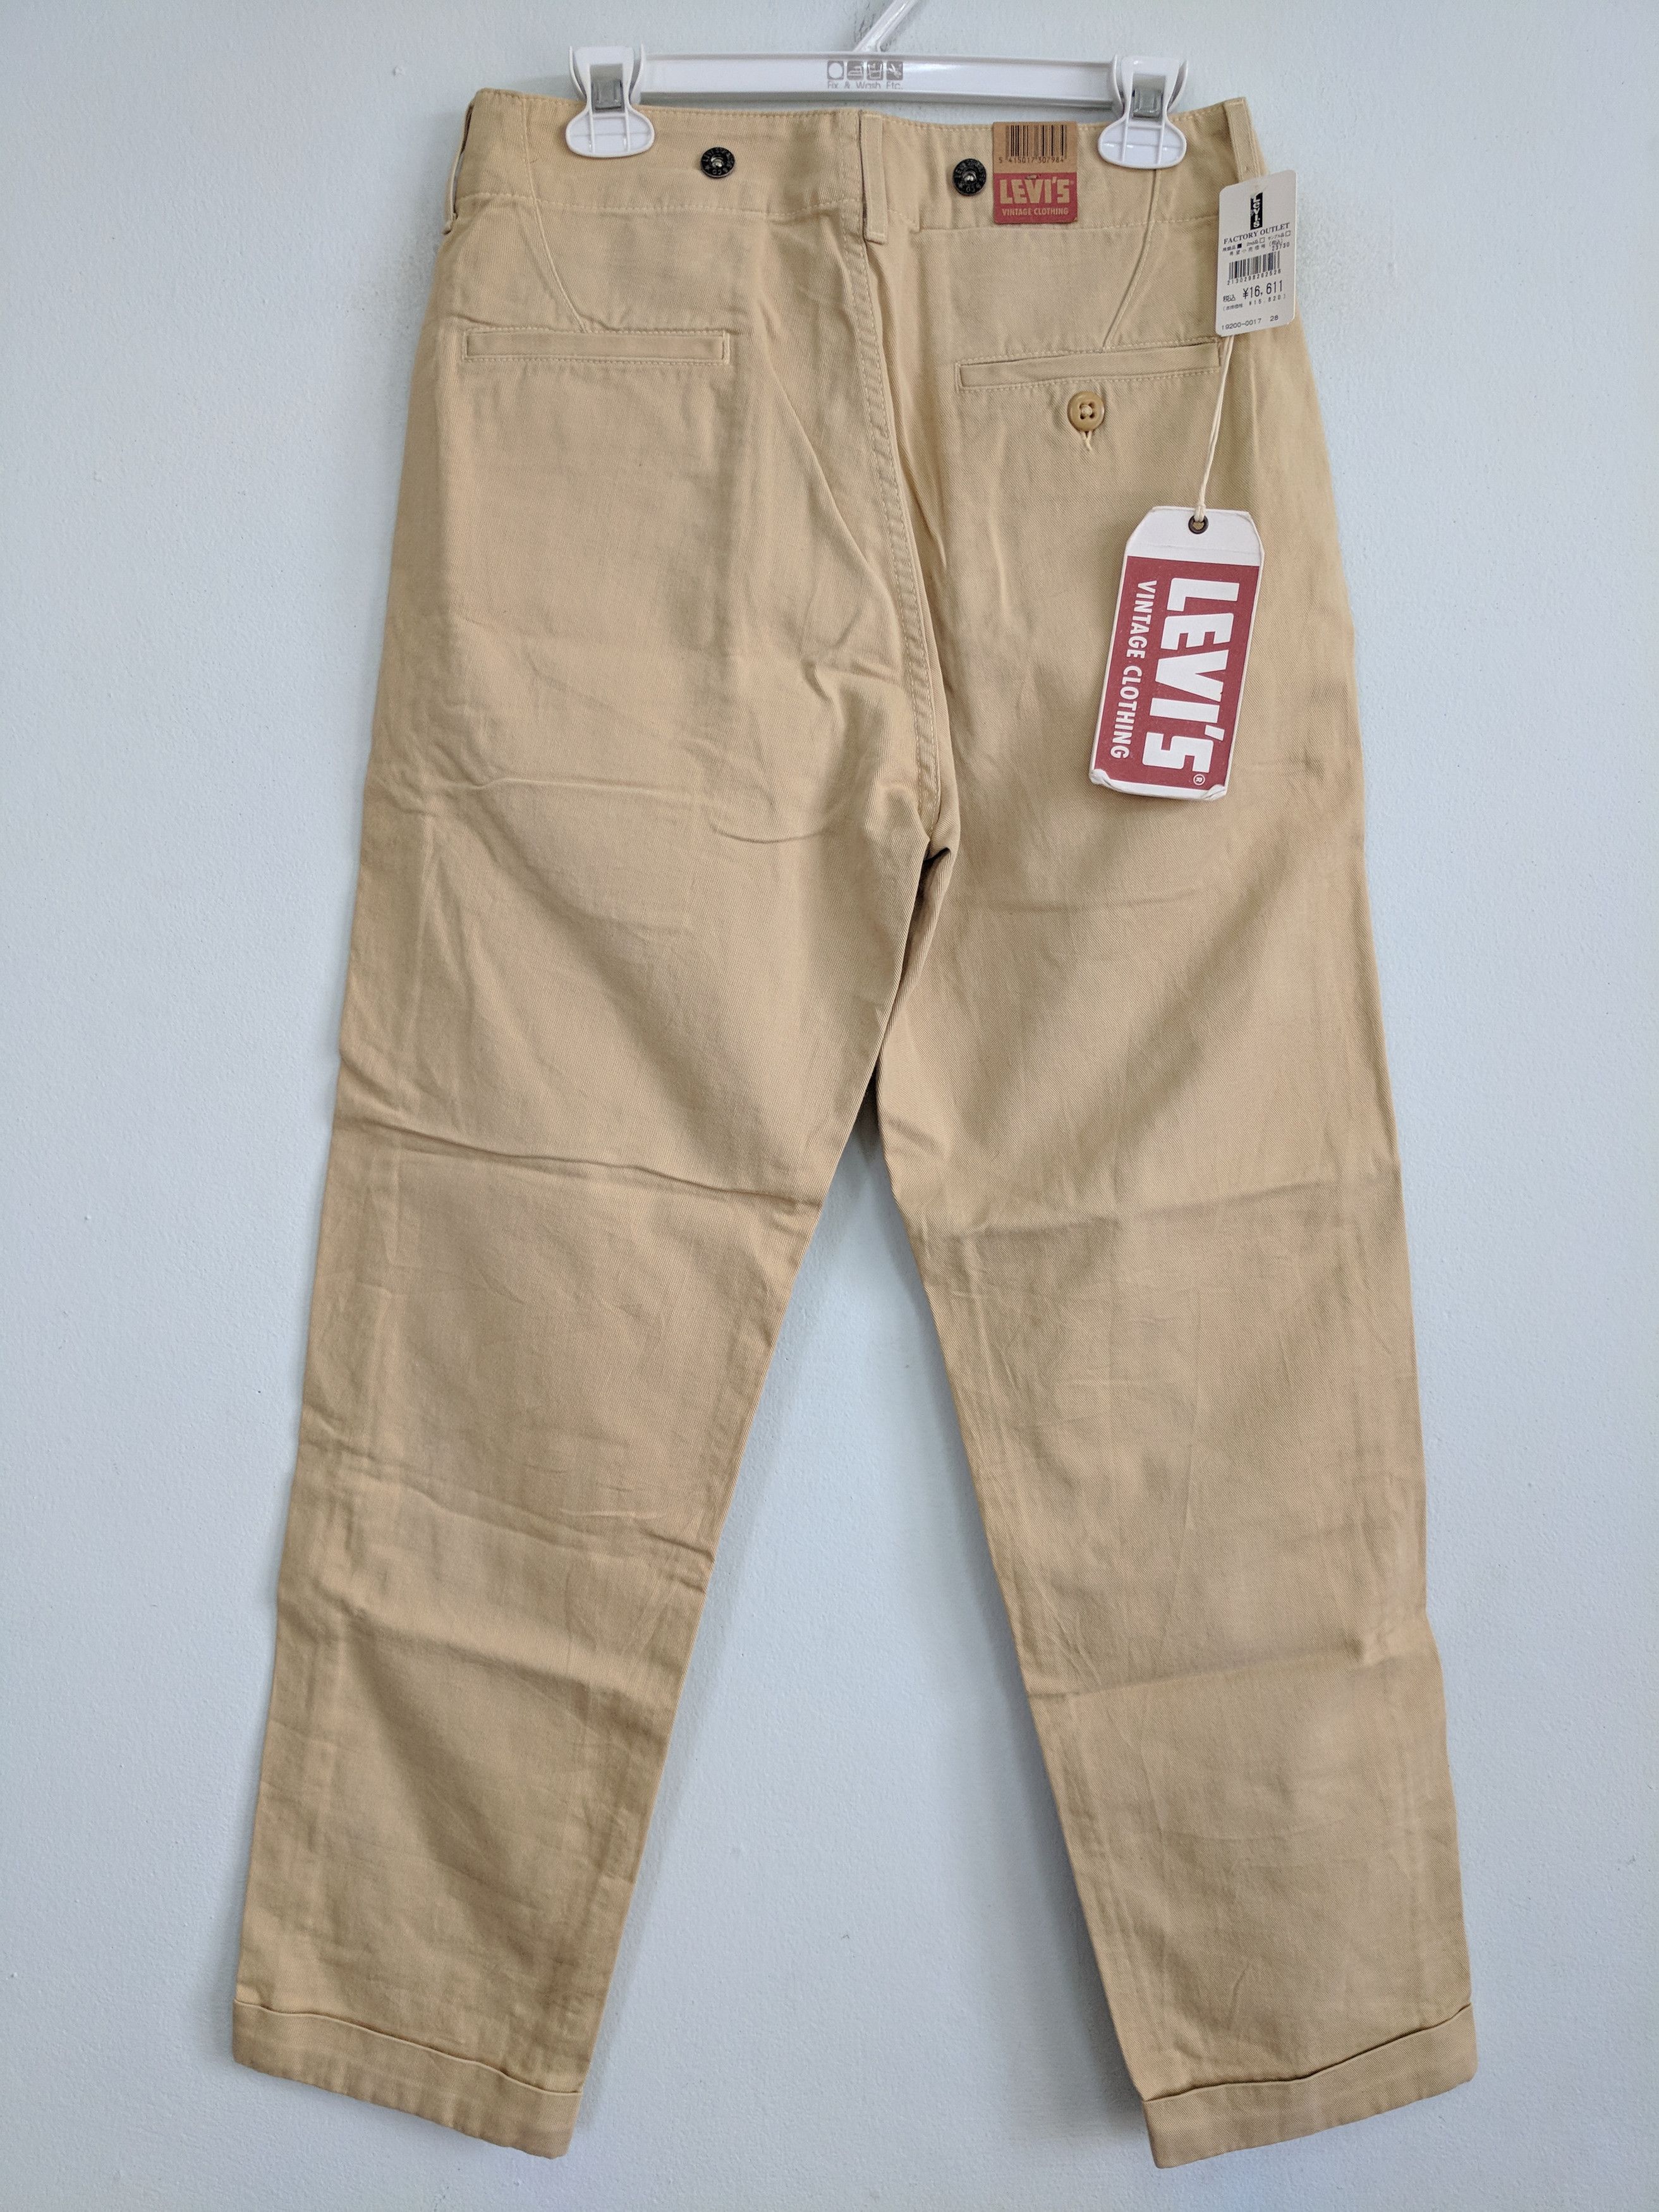 Levi's Levis LVC vintage clothing San Francisco deadstock khakis chino 1920s style pants size 29 30 Size US 29 - 3 Thumbnail